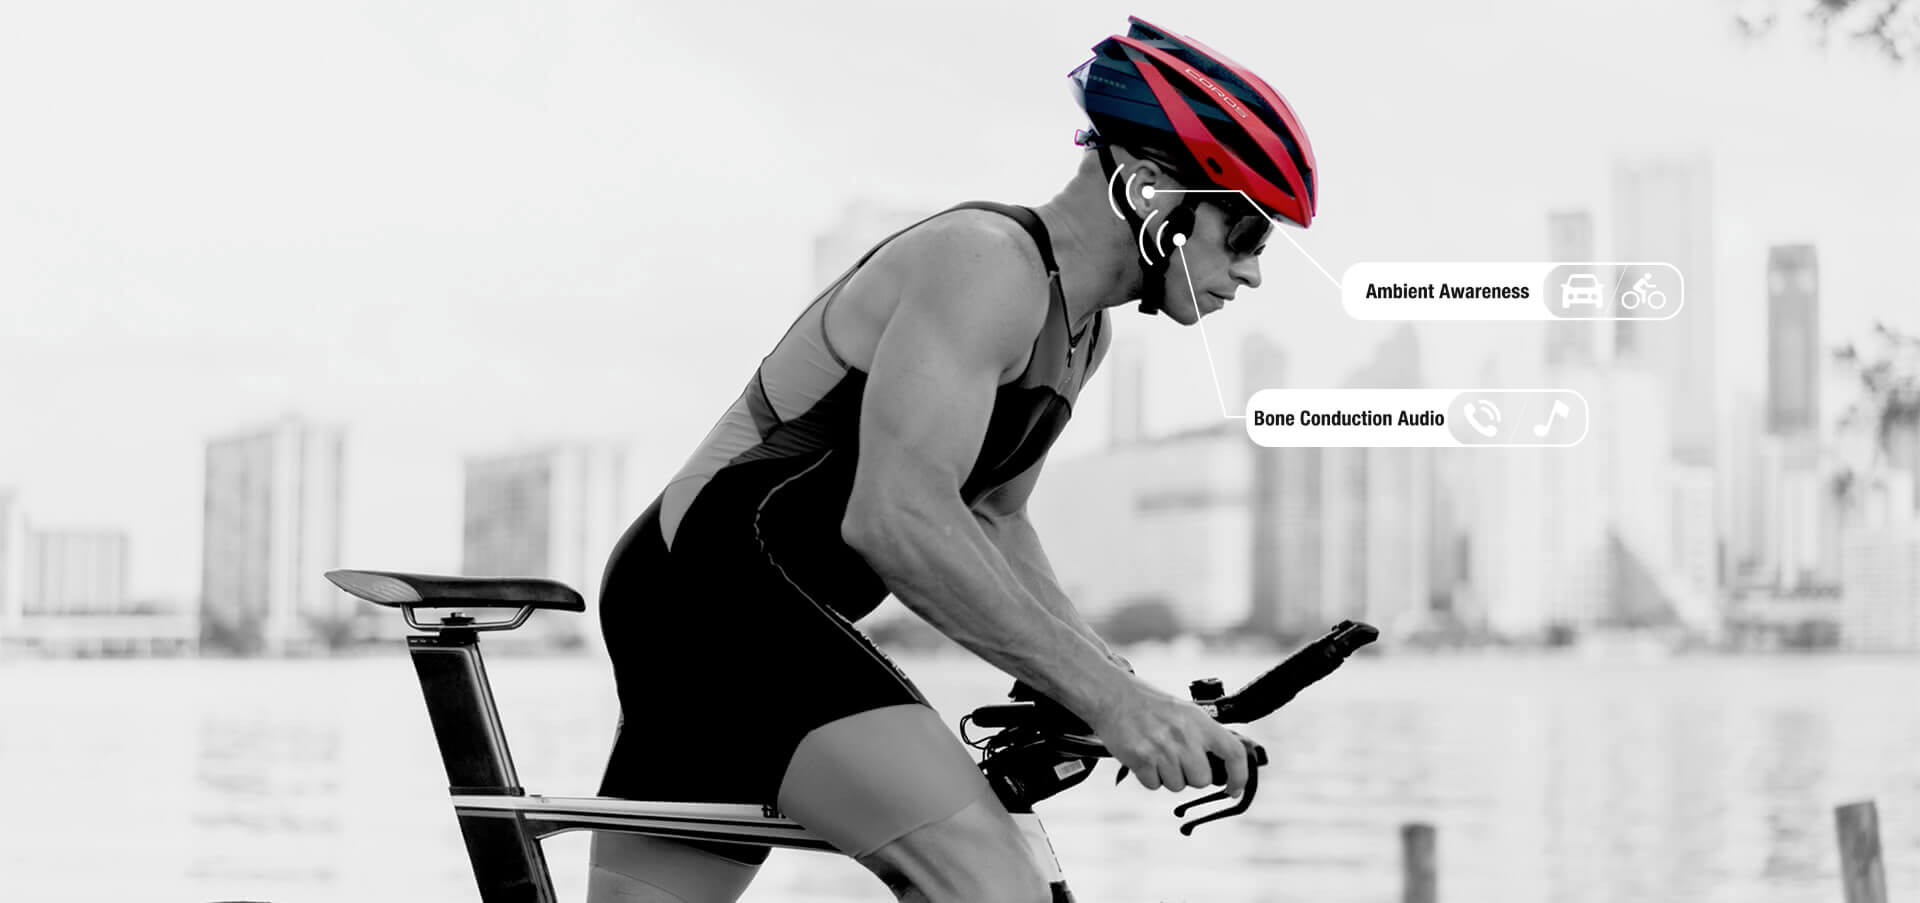 coros omni smart cycling helmet